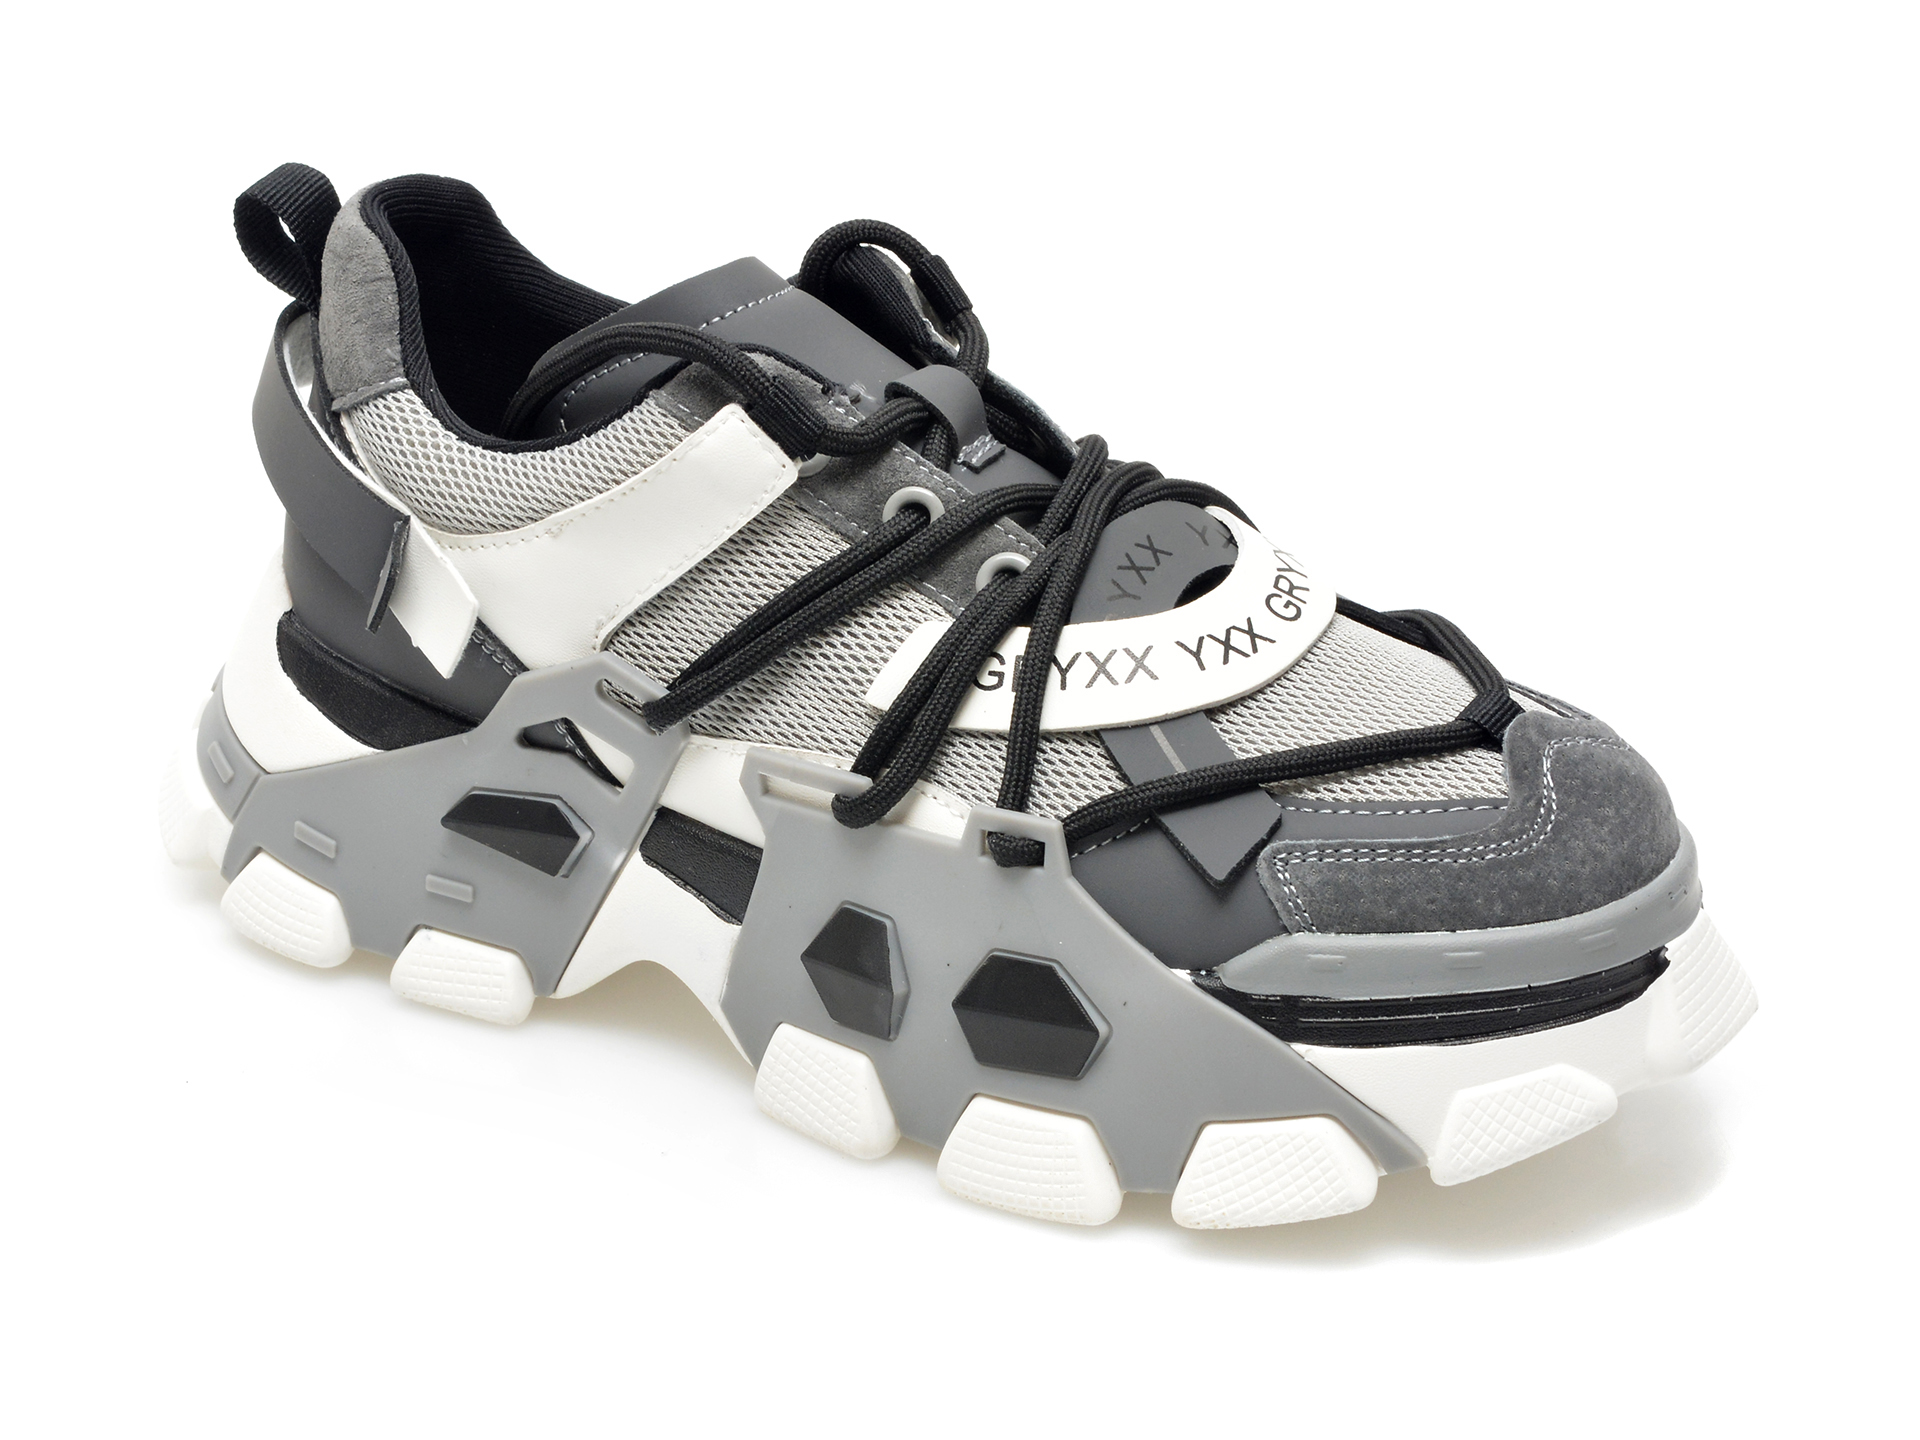 Pantofi sport GRYXX gri, Q352, din material textil si piele intoarsa Gryxx